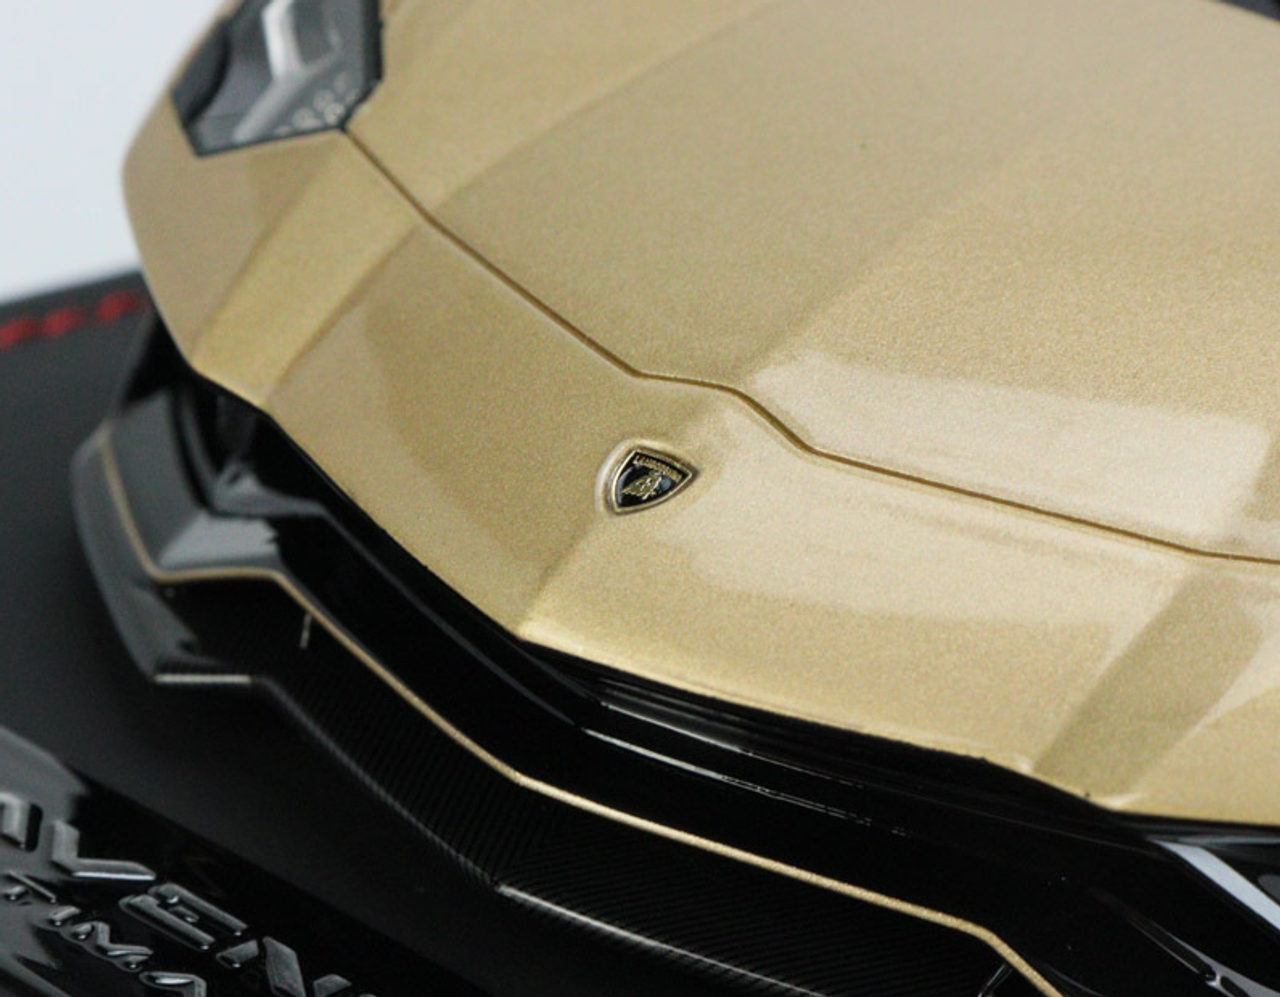 1/18 MR Collection Lamborghini  Aventador Ultimae LP780-4 Convertible car Champagne gold